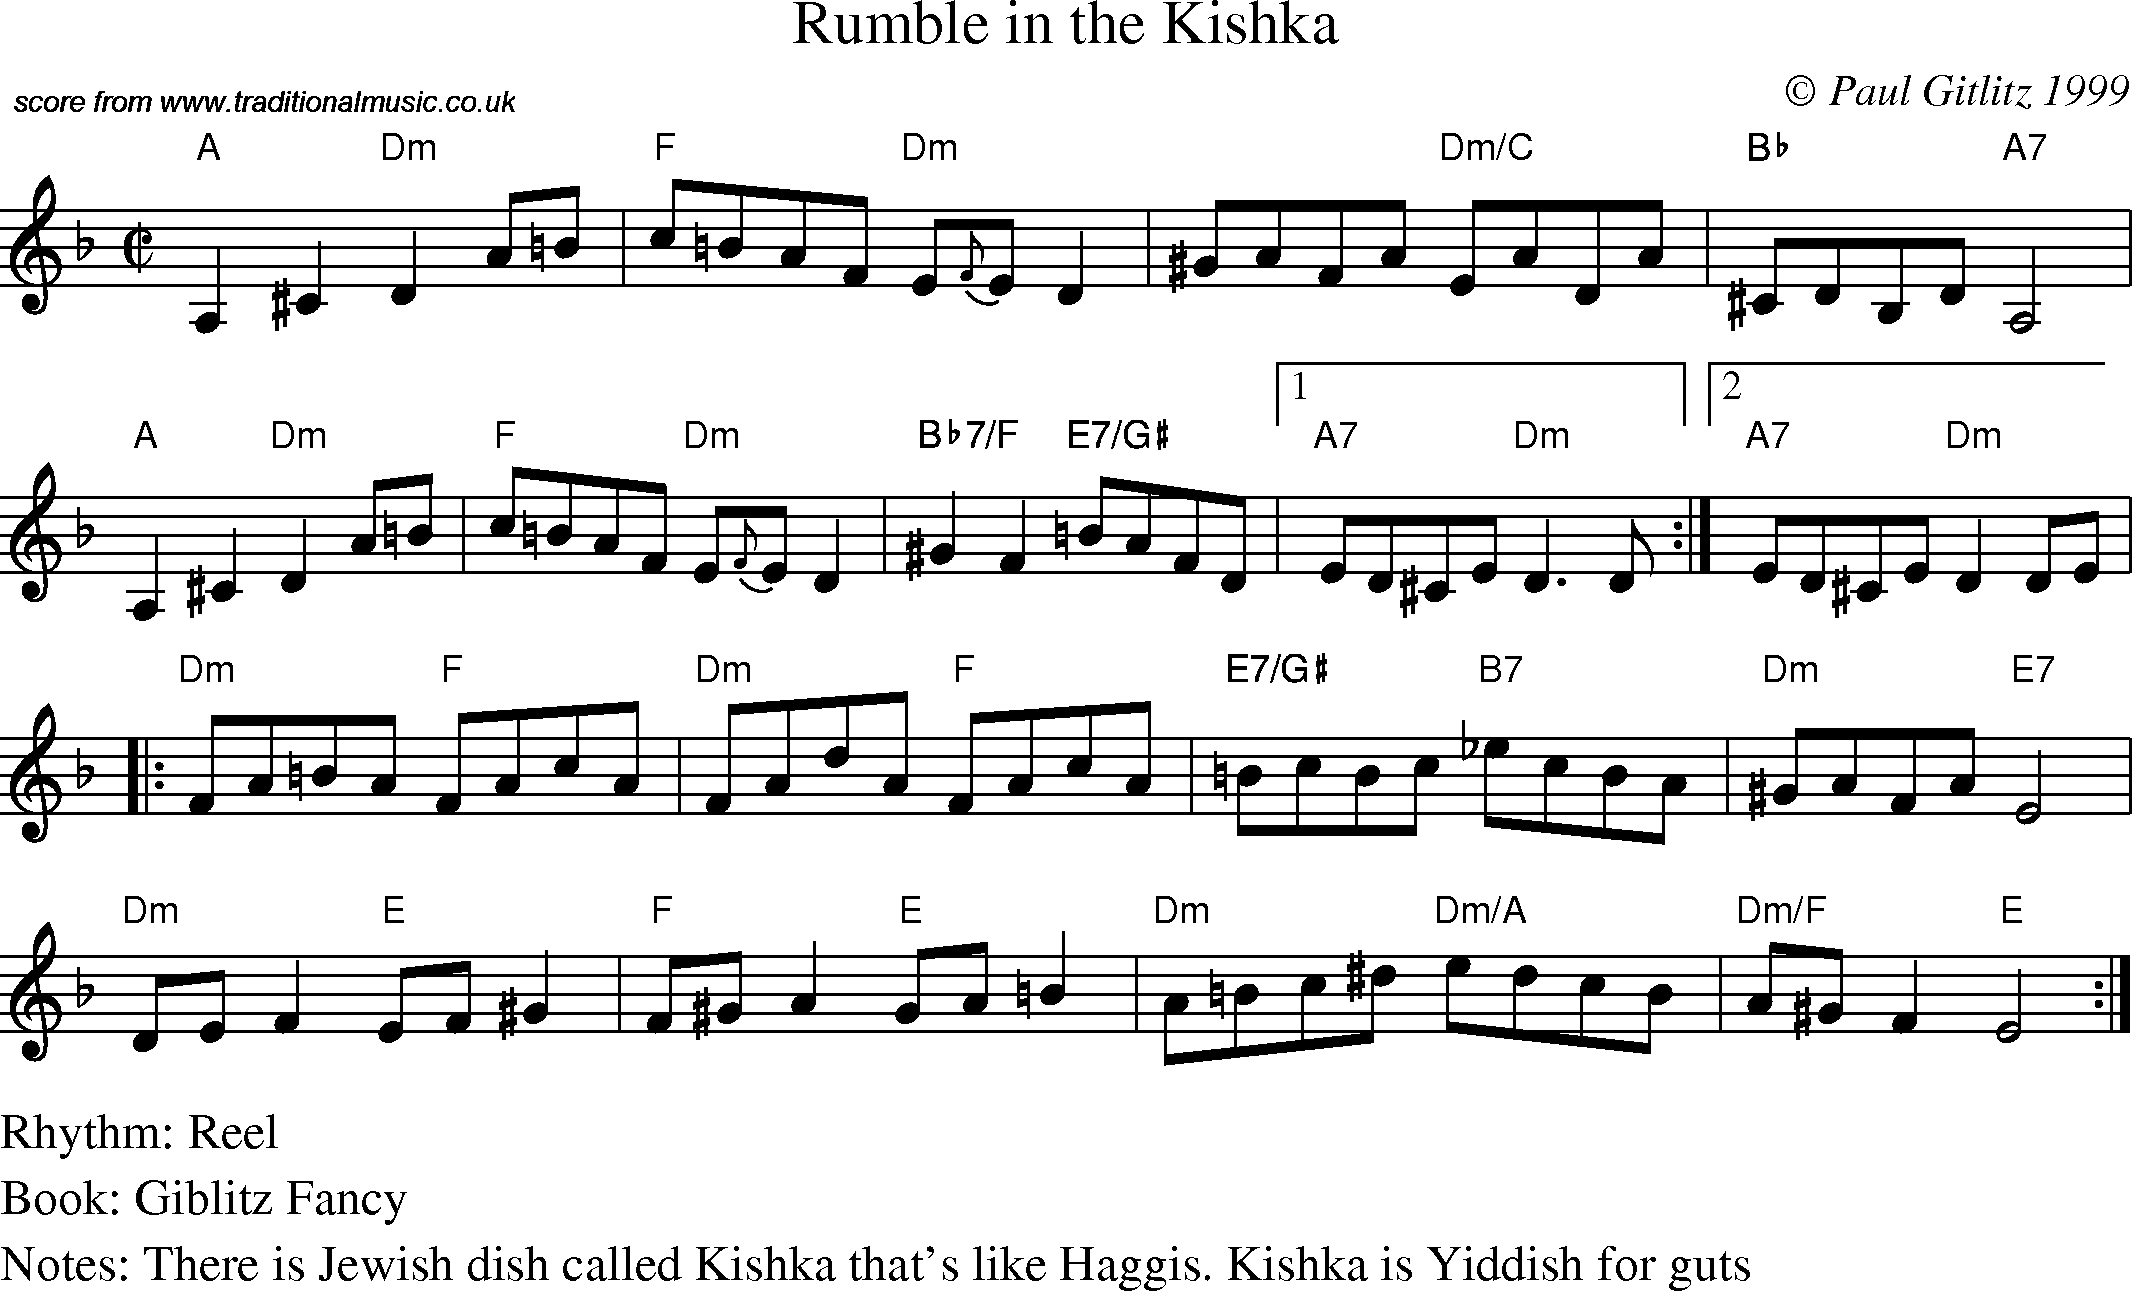 Sheet Music Score for Reel - Rumble in the Kishka